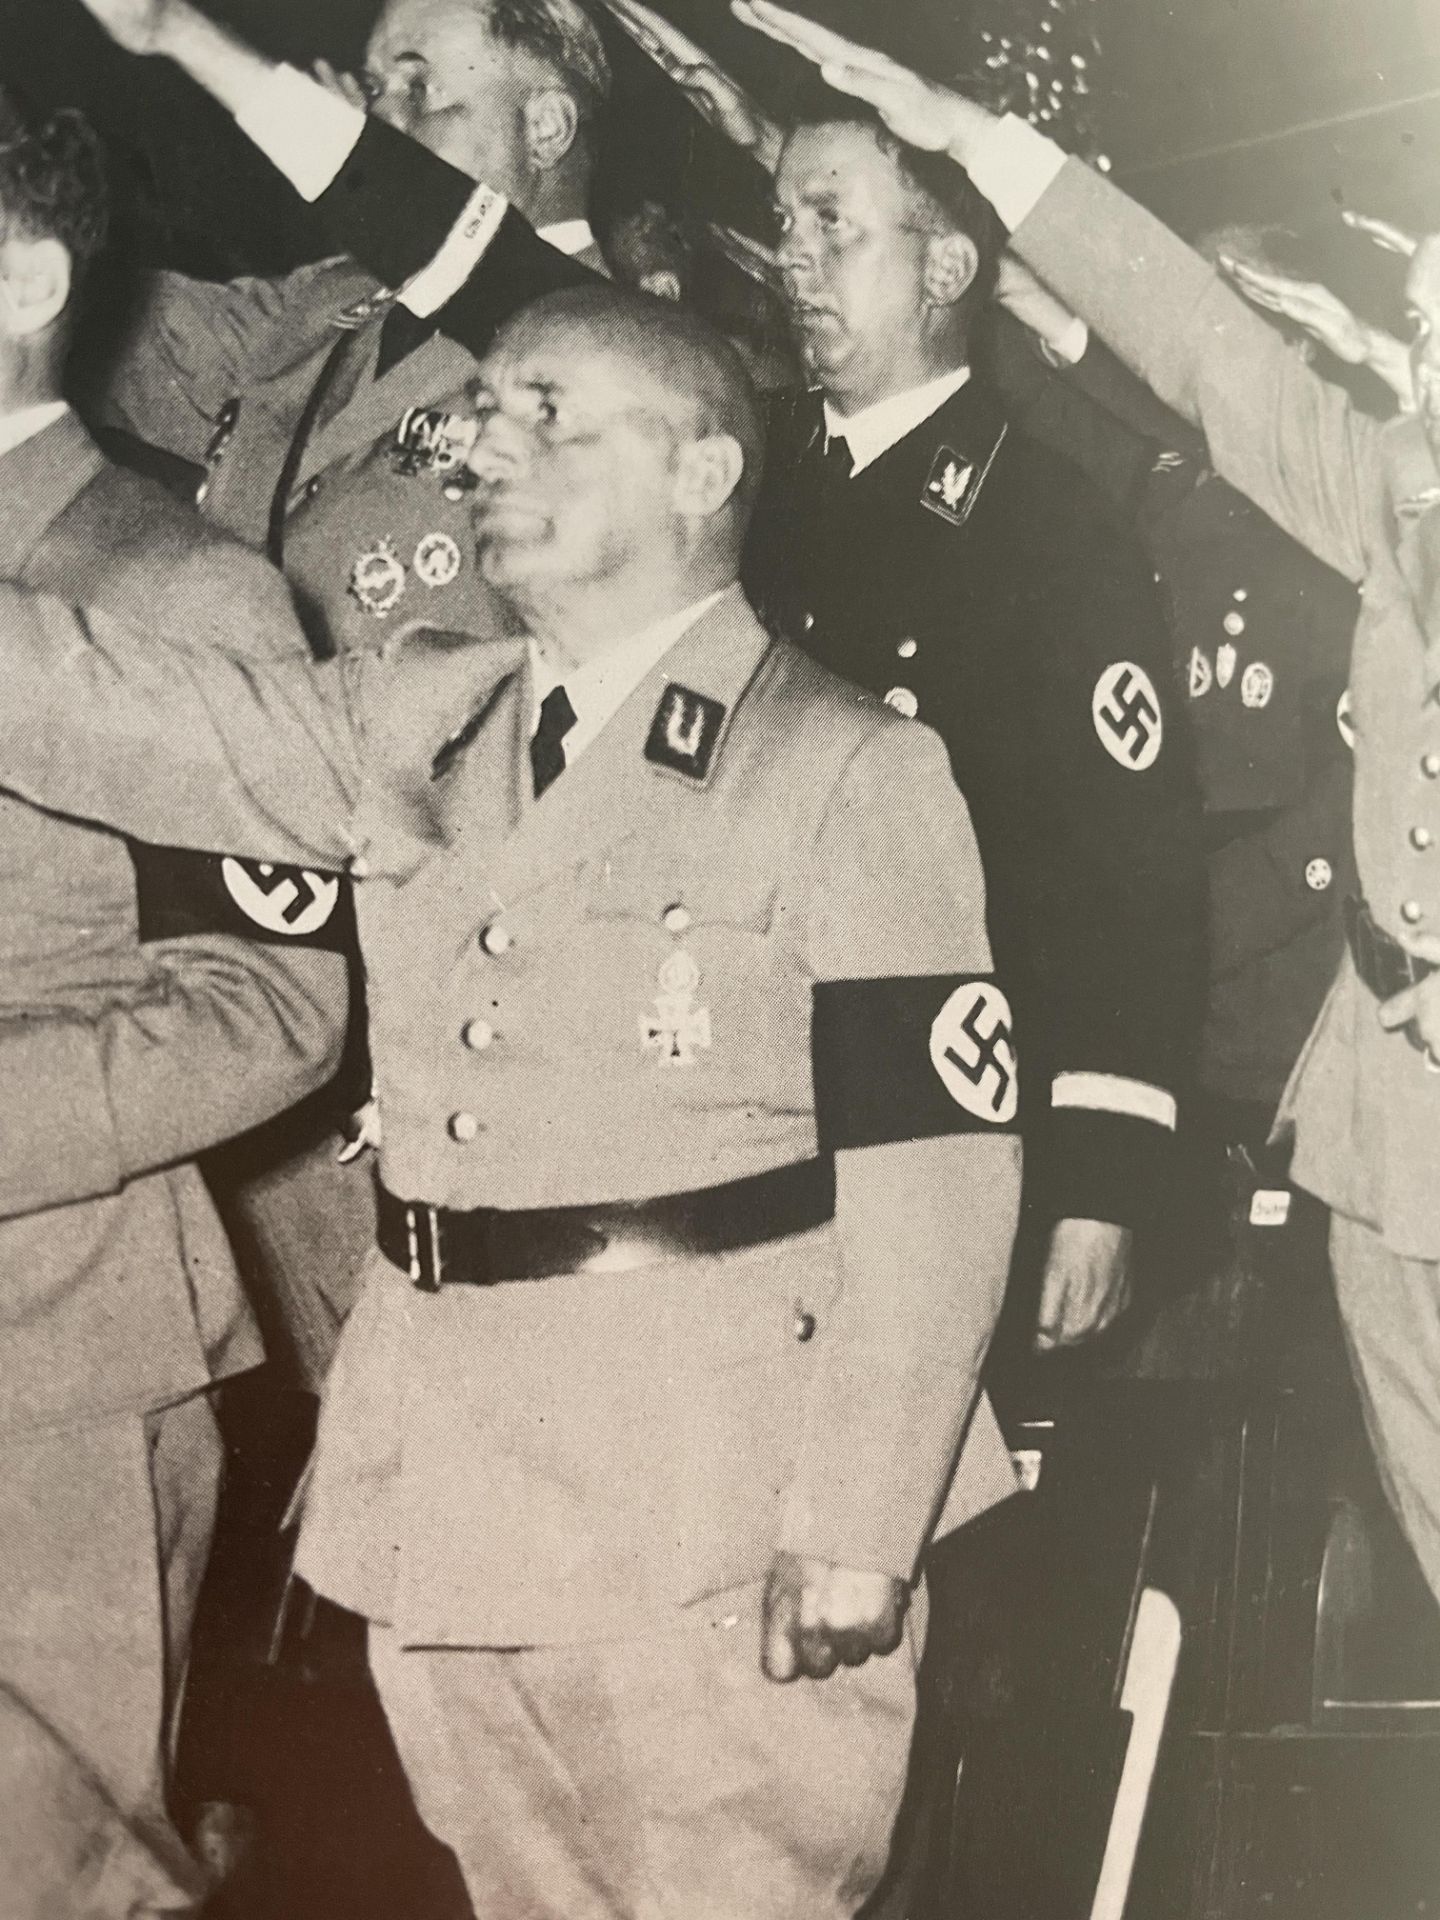 Germany "WWII, Adolf Hitler, Nazi Leaders" Print - Image 2 of 5